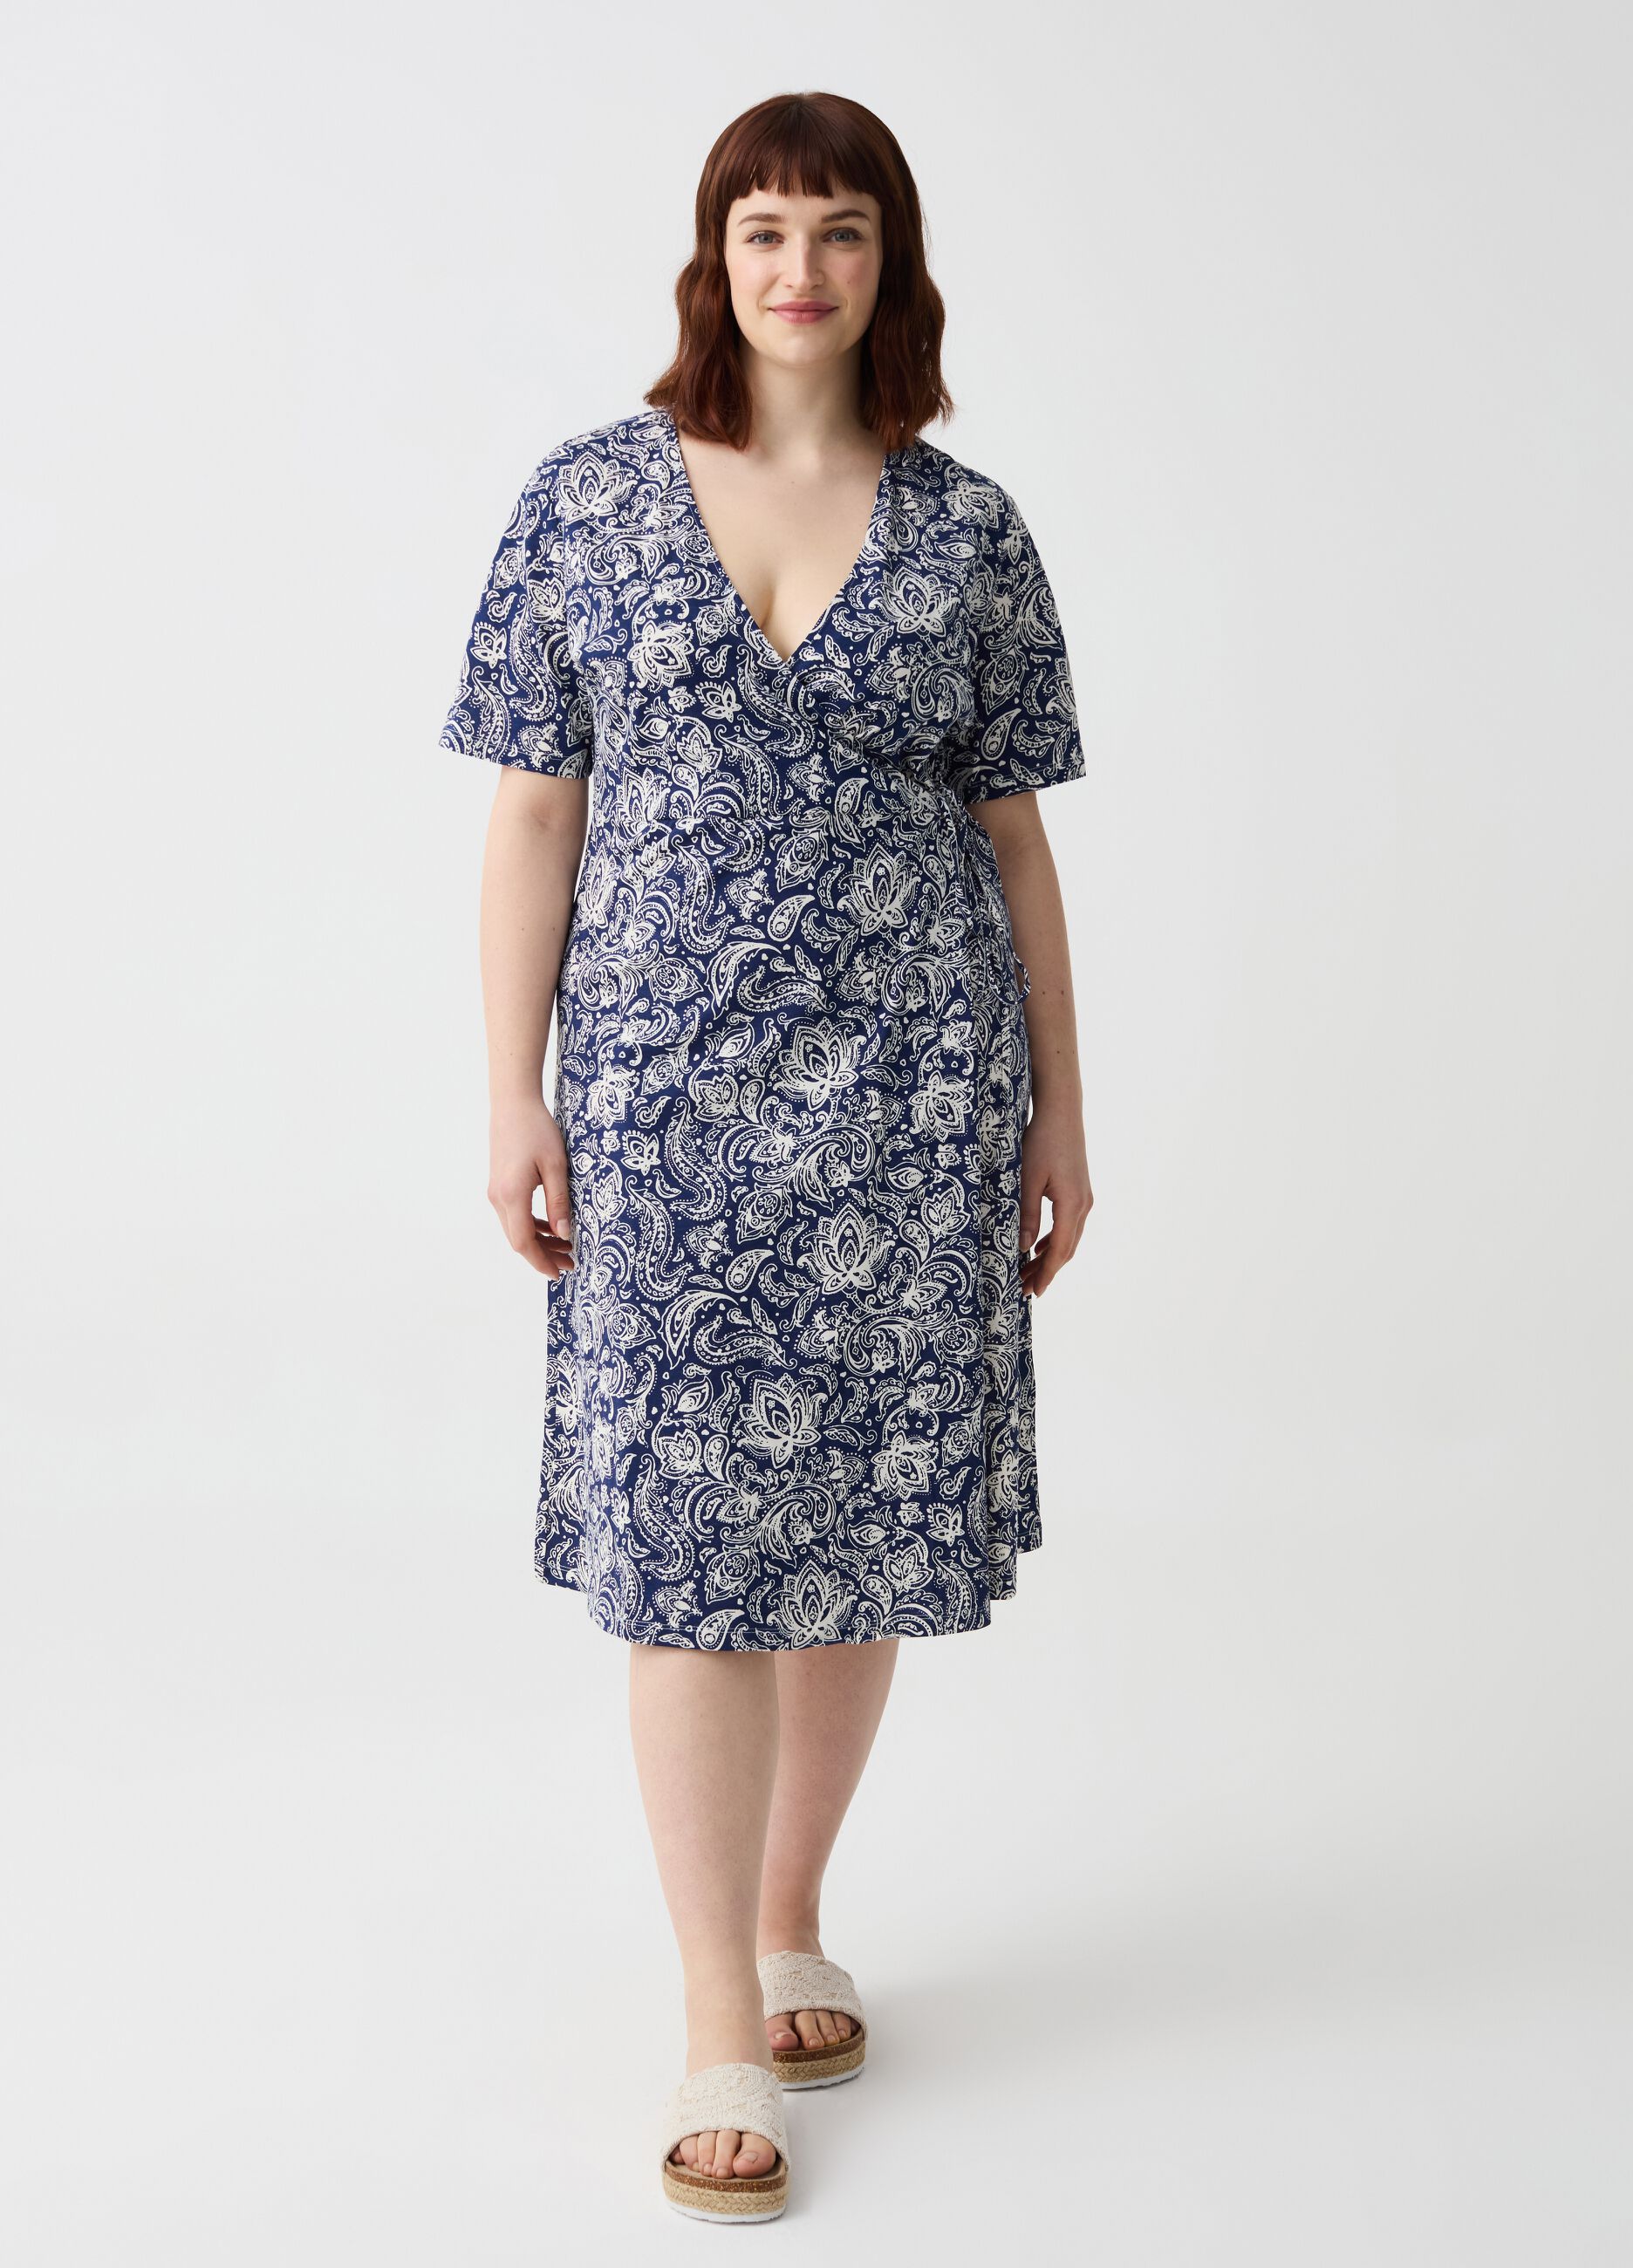 Curvy short wraparound dress with paisley print